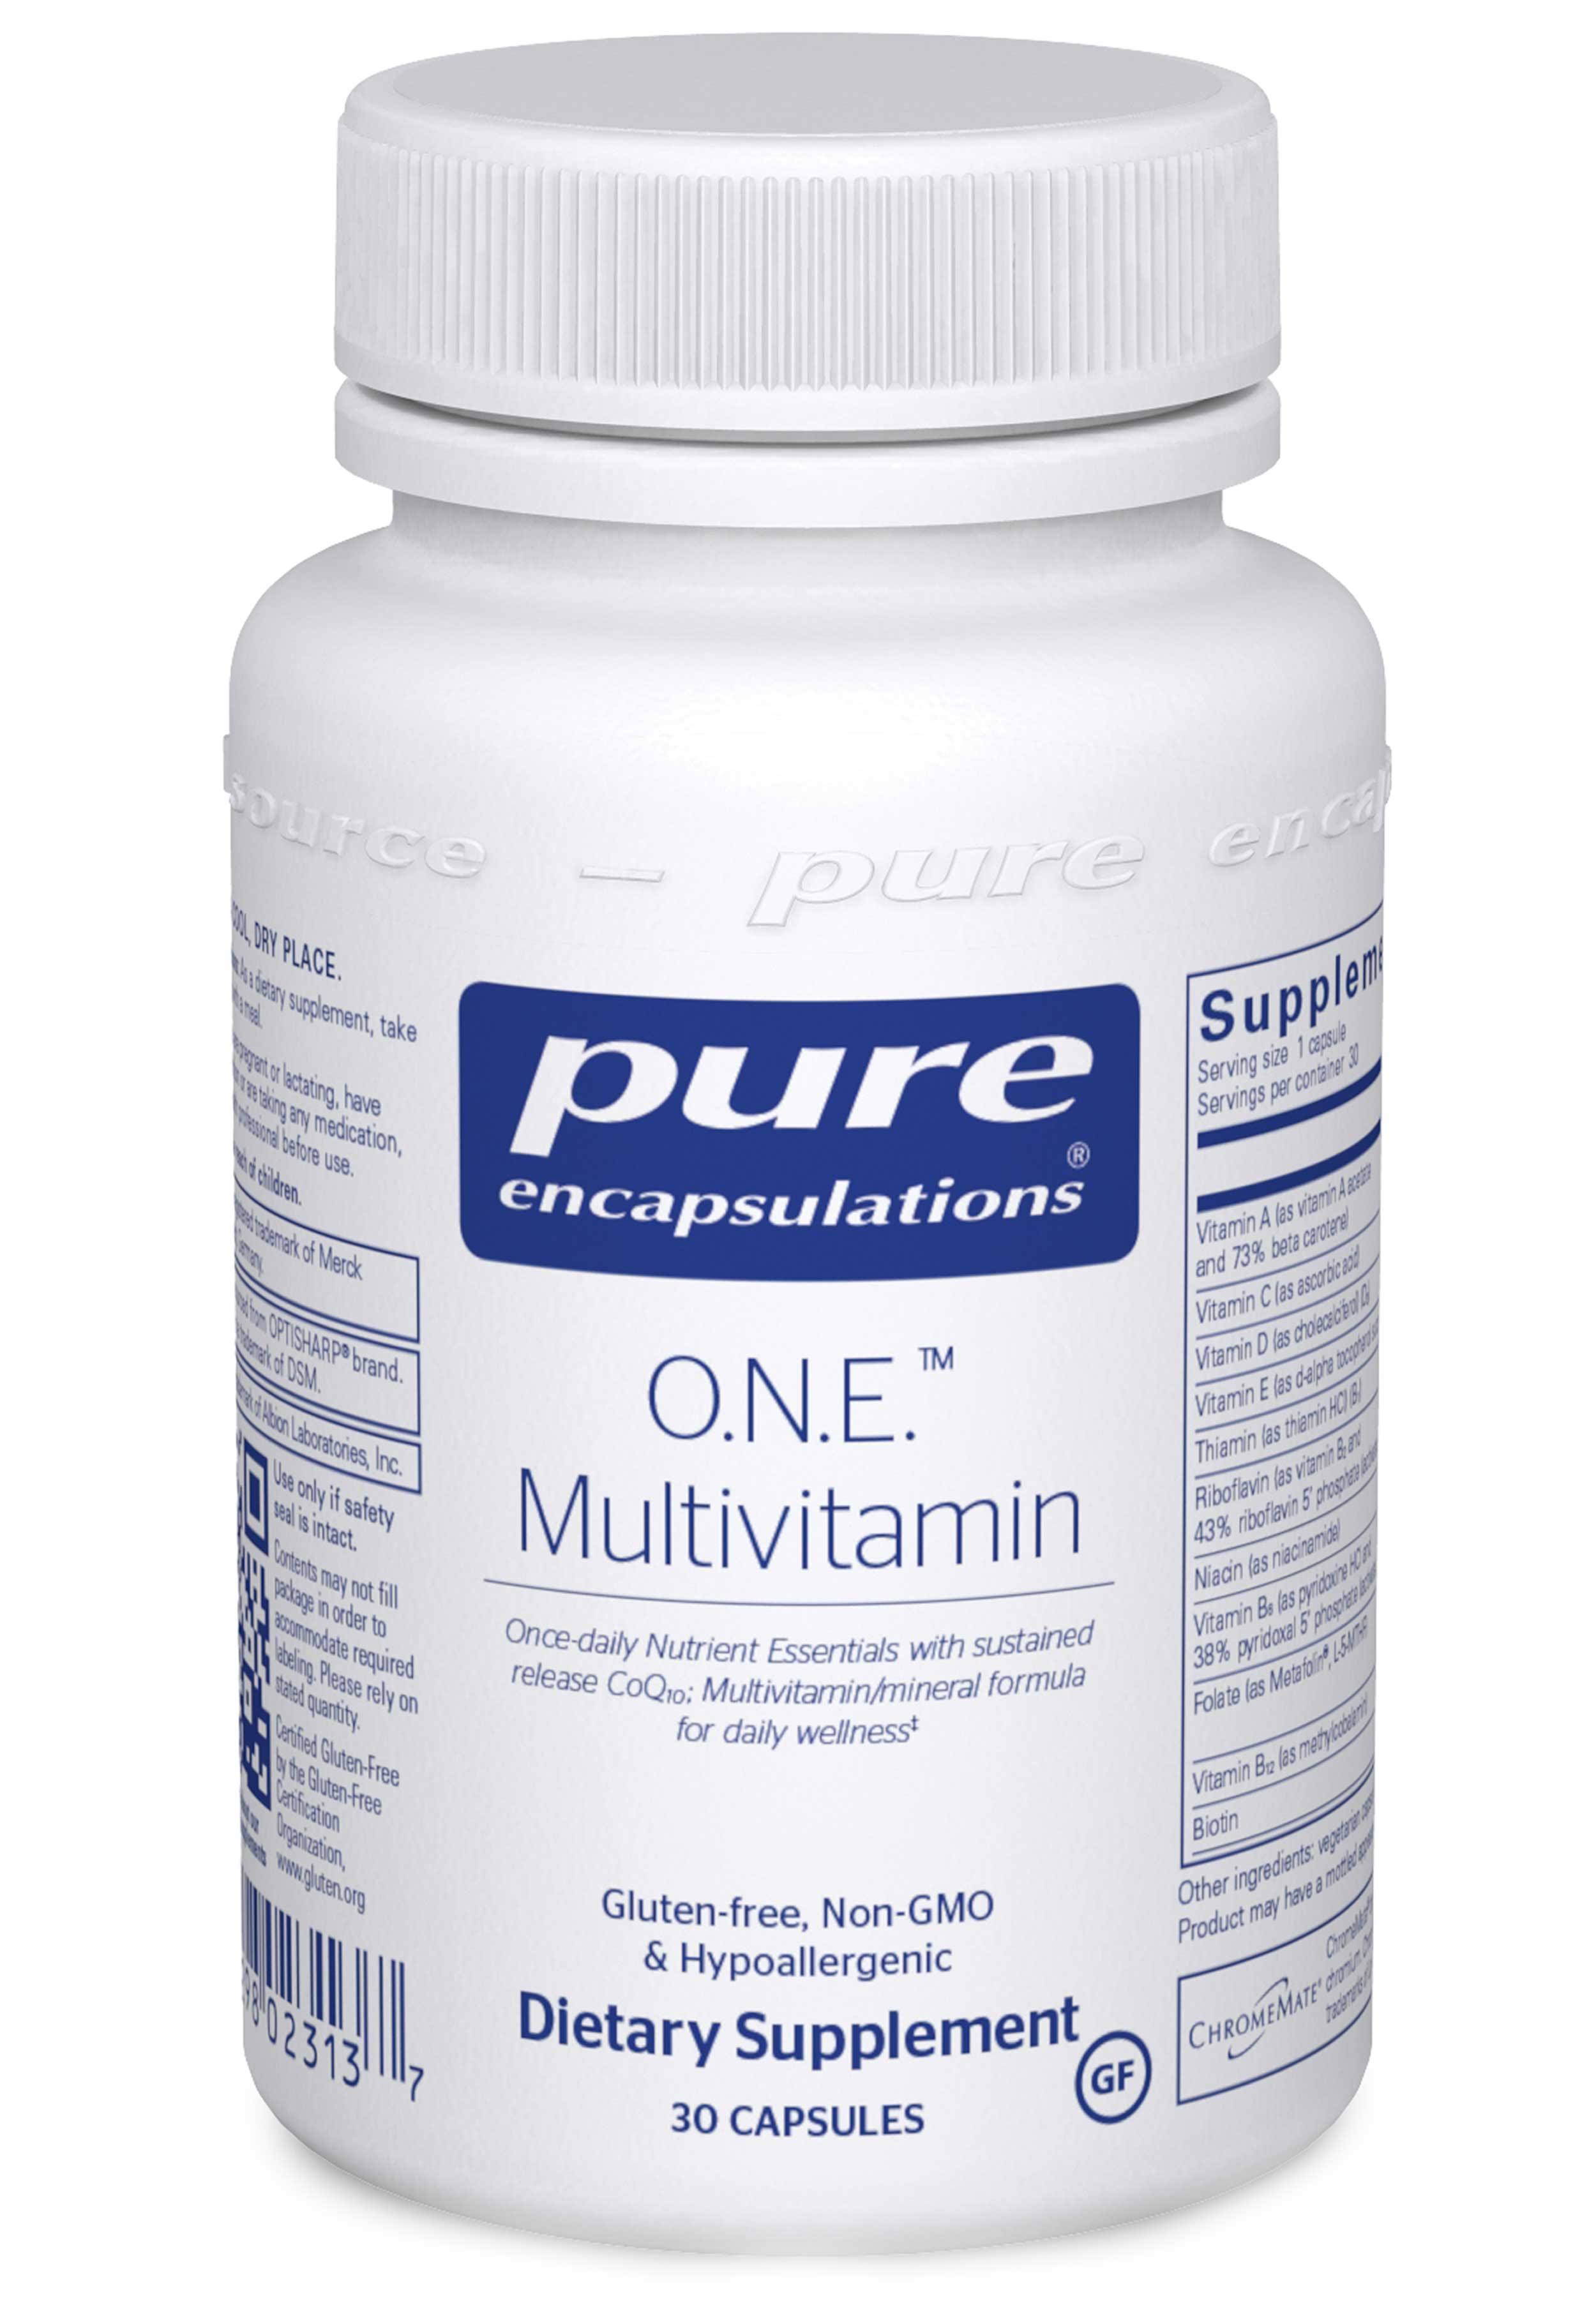 Pure Encapsulations - O.N.E. Multivitamin - 30 Capsules